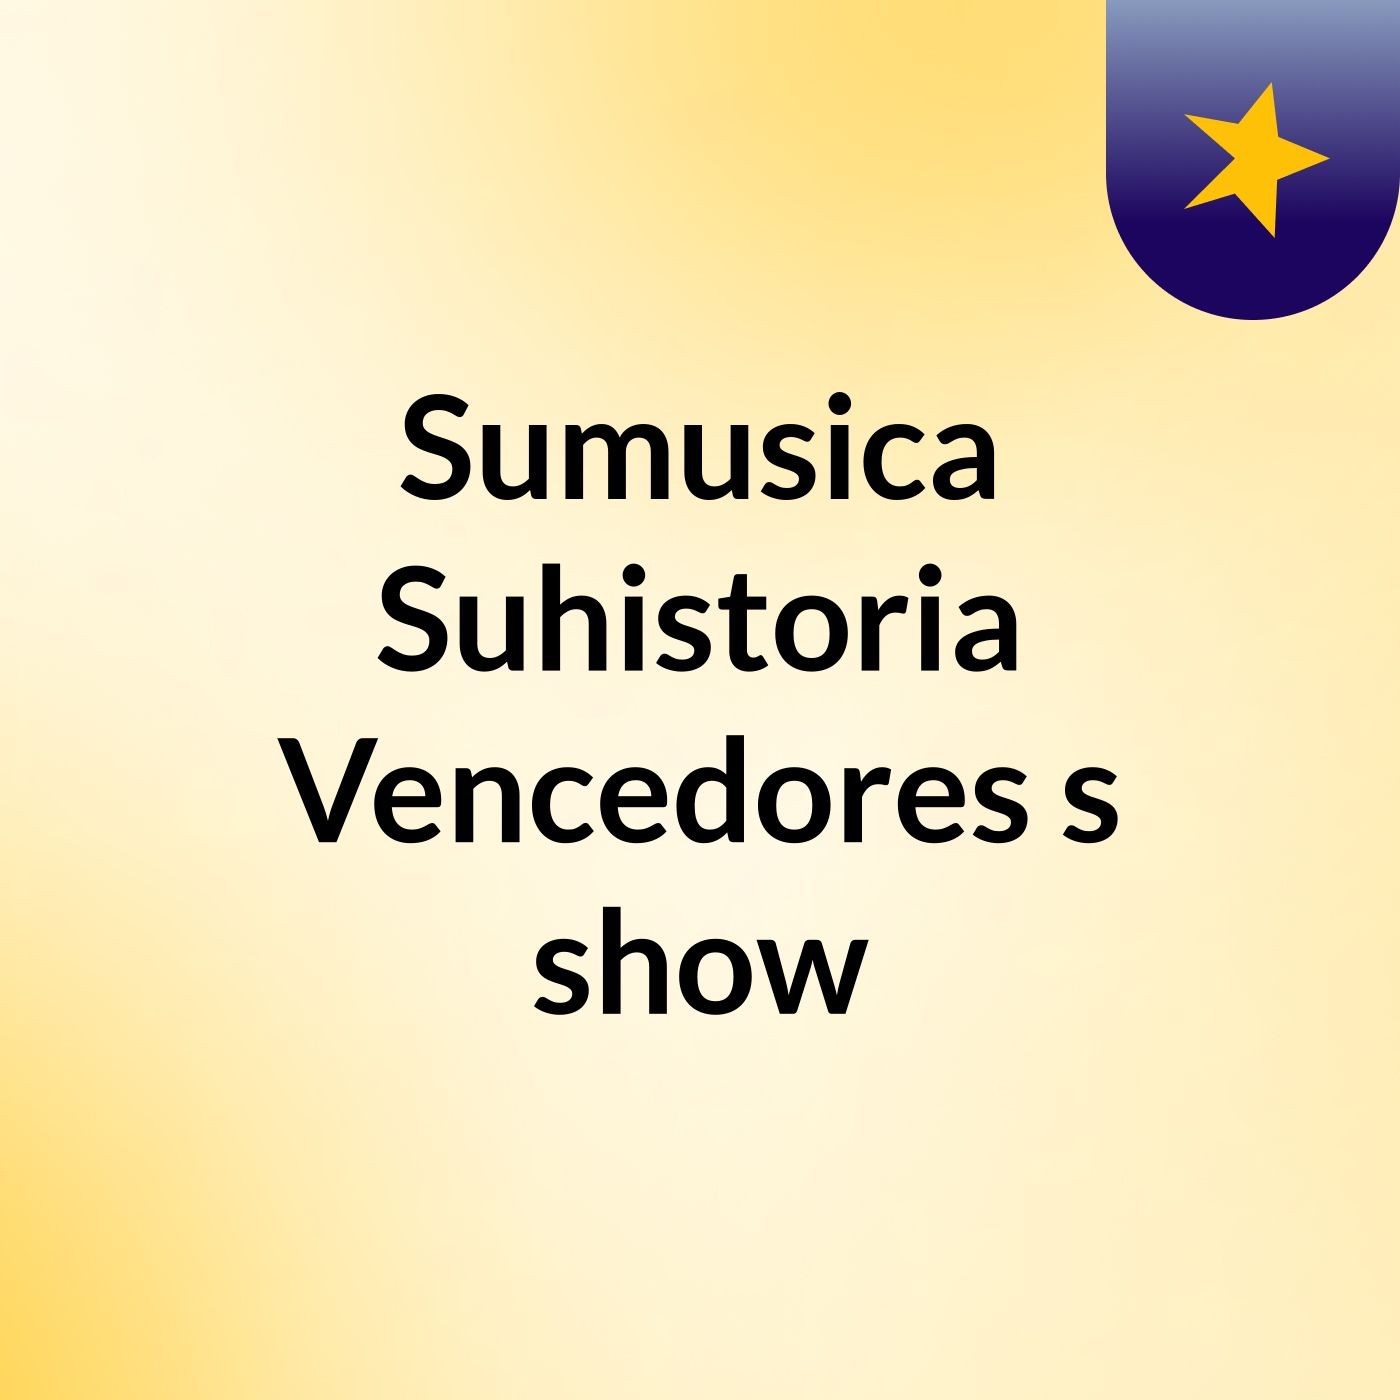 Sumusica Suhistoria Vencedores's show